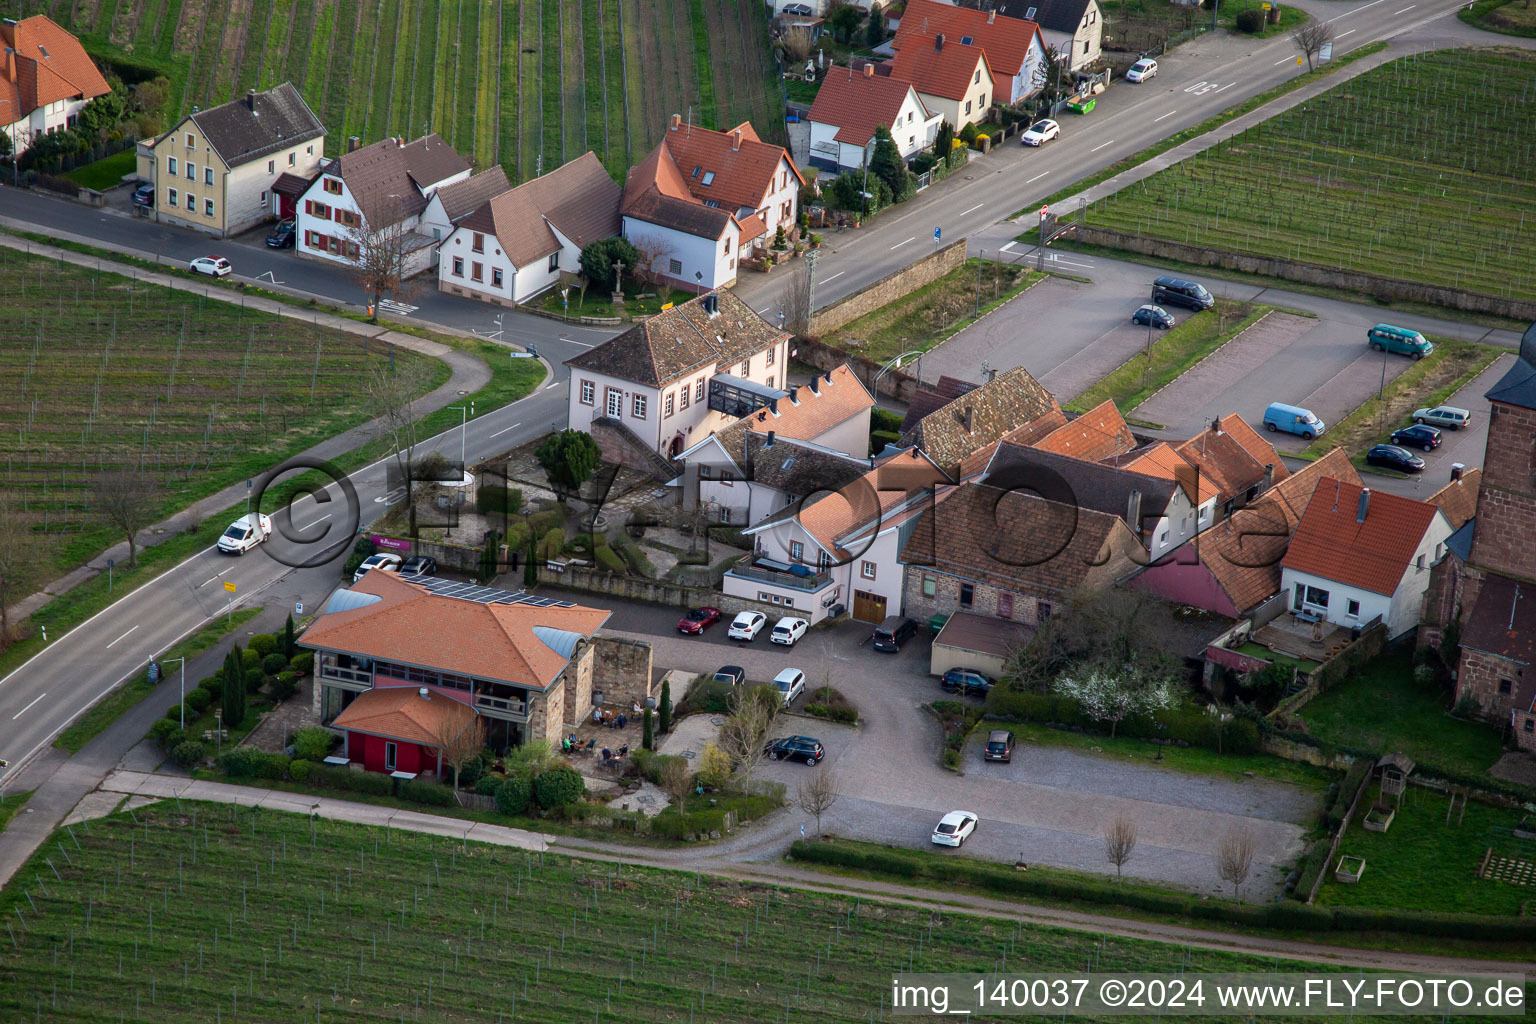 Aerial view of The wine house - Vinothek Meßmer, Ritterhof zur Rose in Burrweiler in the state Rhineland-Palatinate, Germany